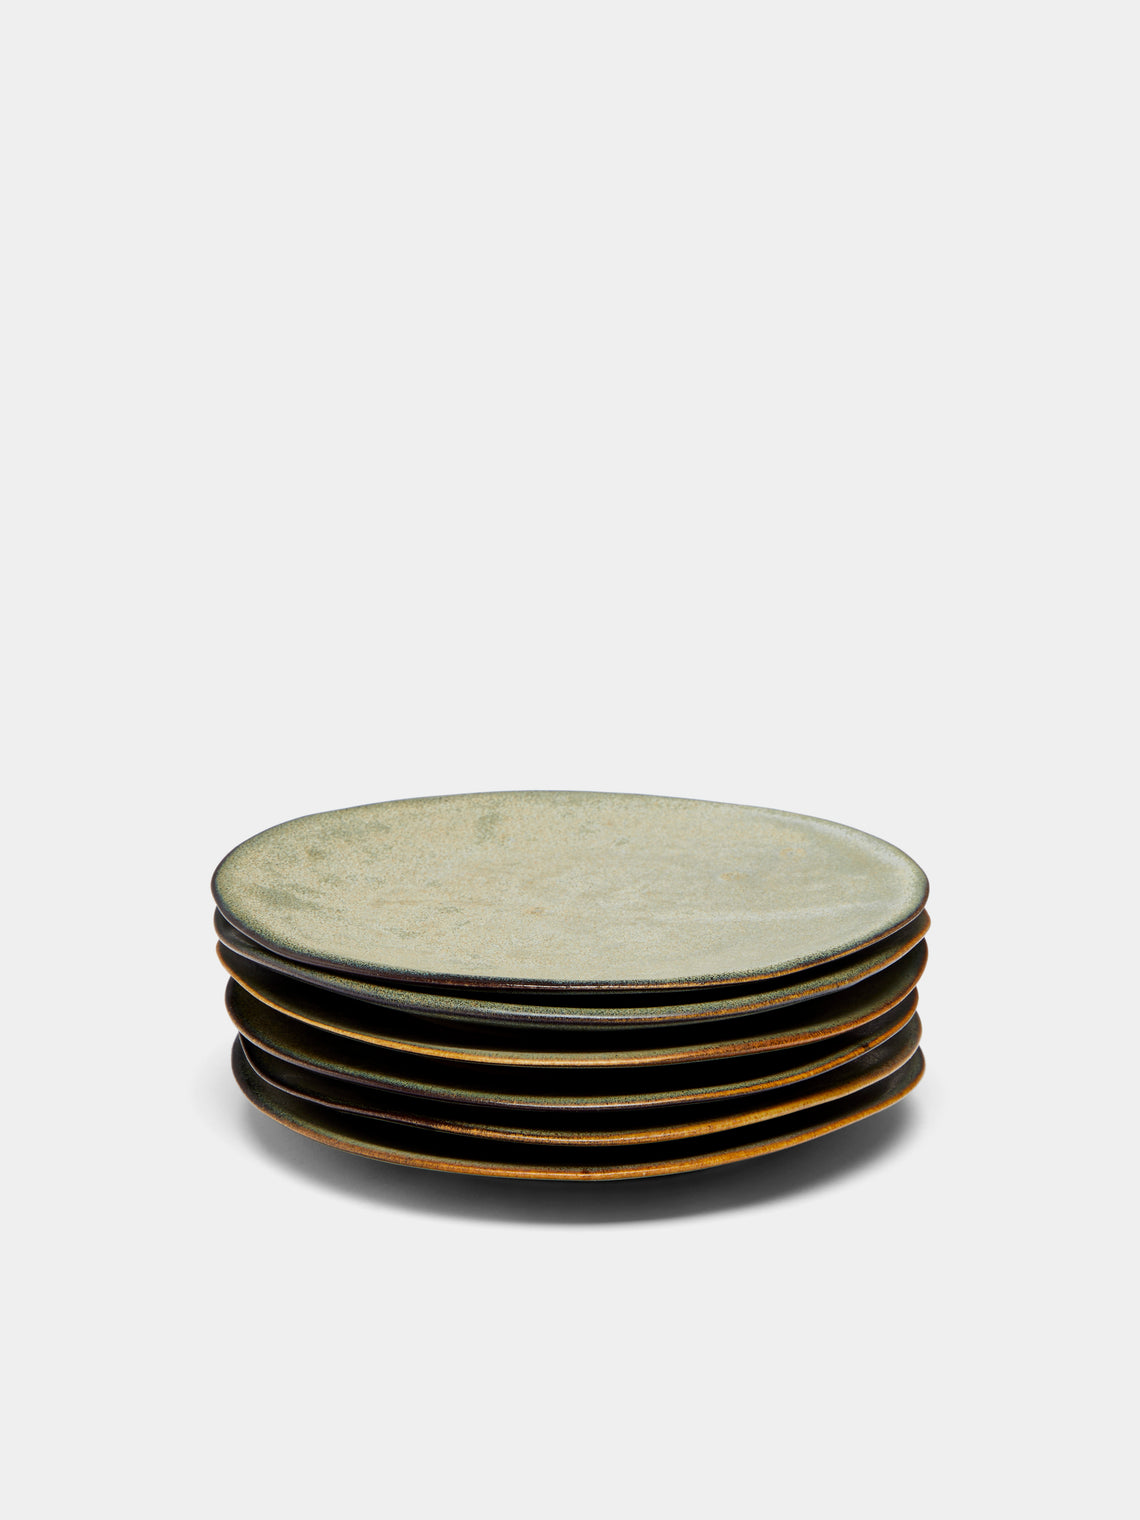 Mervyn Gers Ceramics - Hand-Glazed Ceramic Dessert Plates (Set of 6) - Beige - ABASK